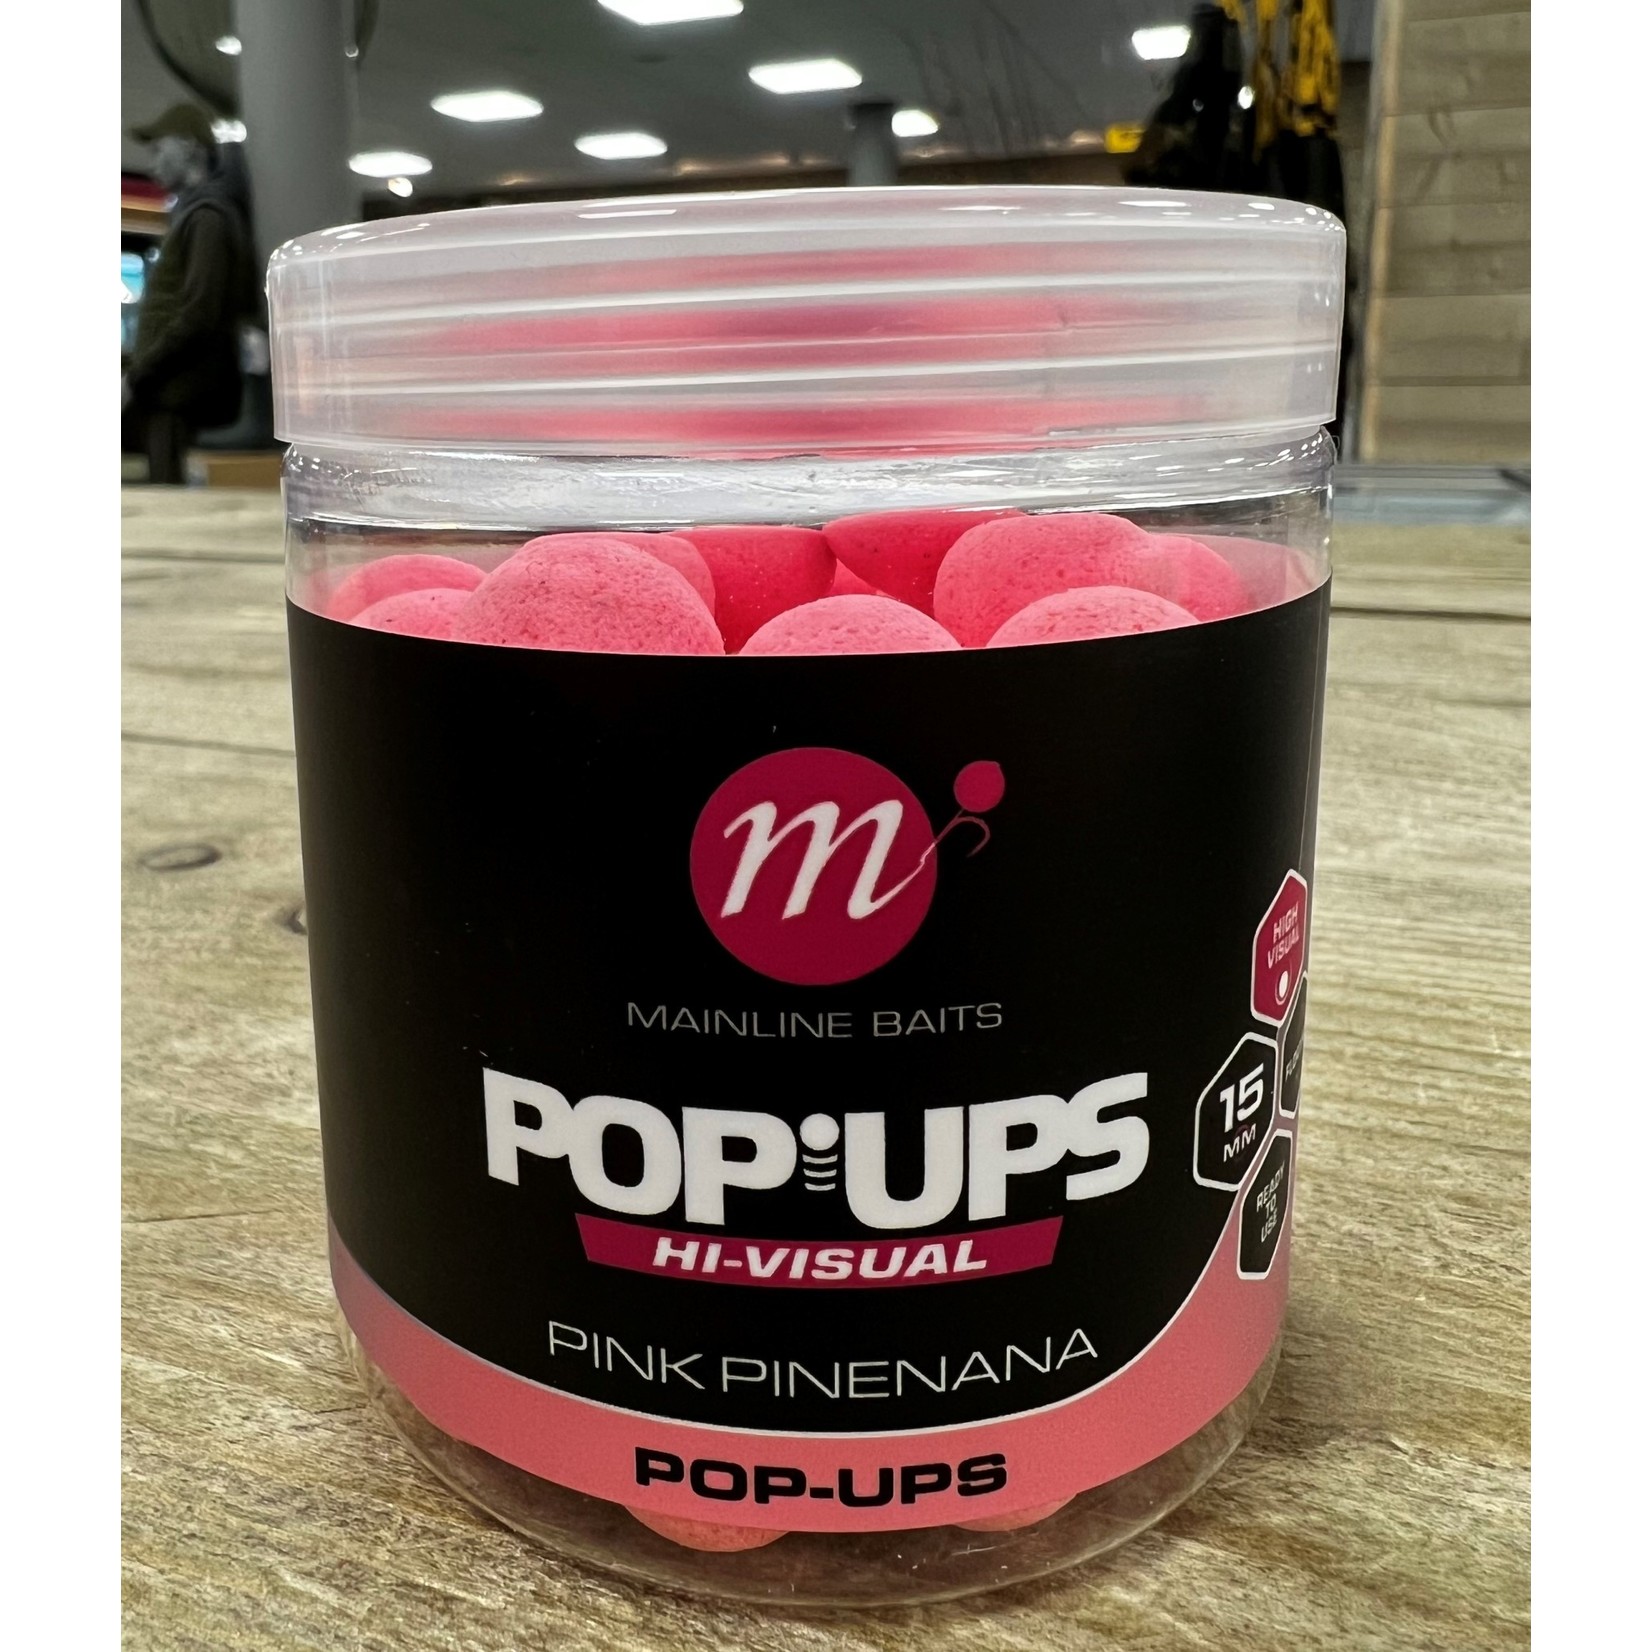 MAINLINE Hi-Visual Pop-up Pink Pinenana 15MM